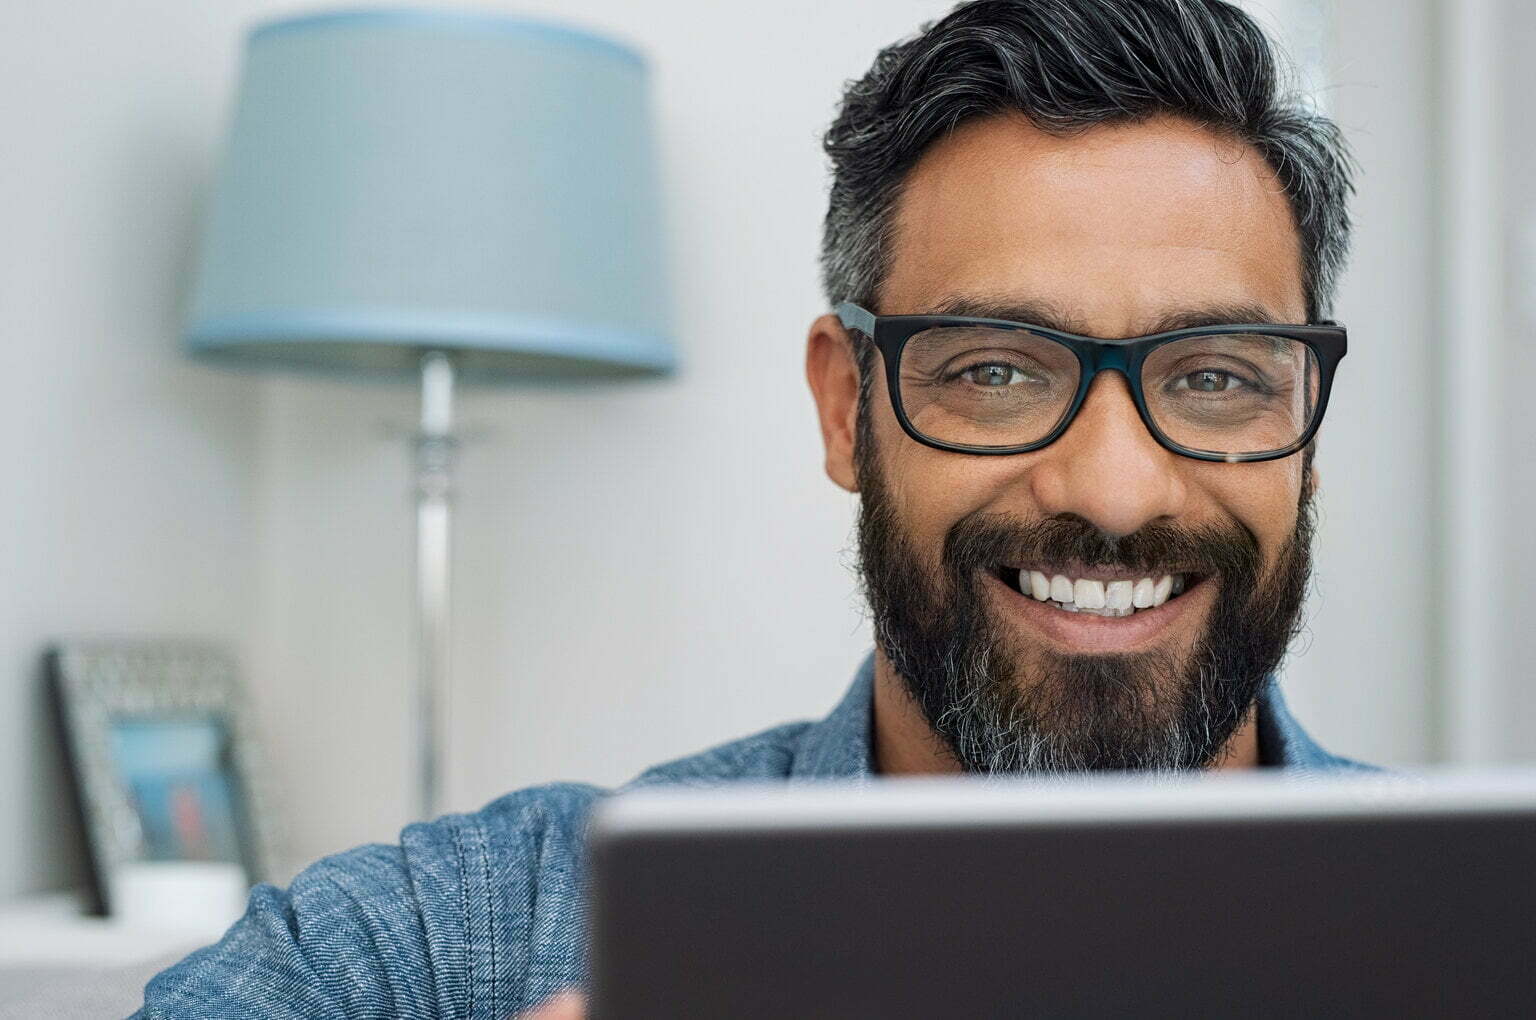 Closeup of a smiling man sitting behind a computer screen